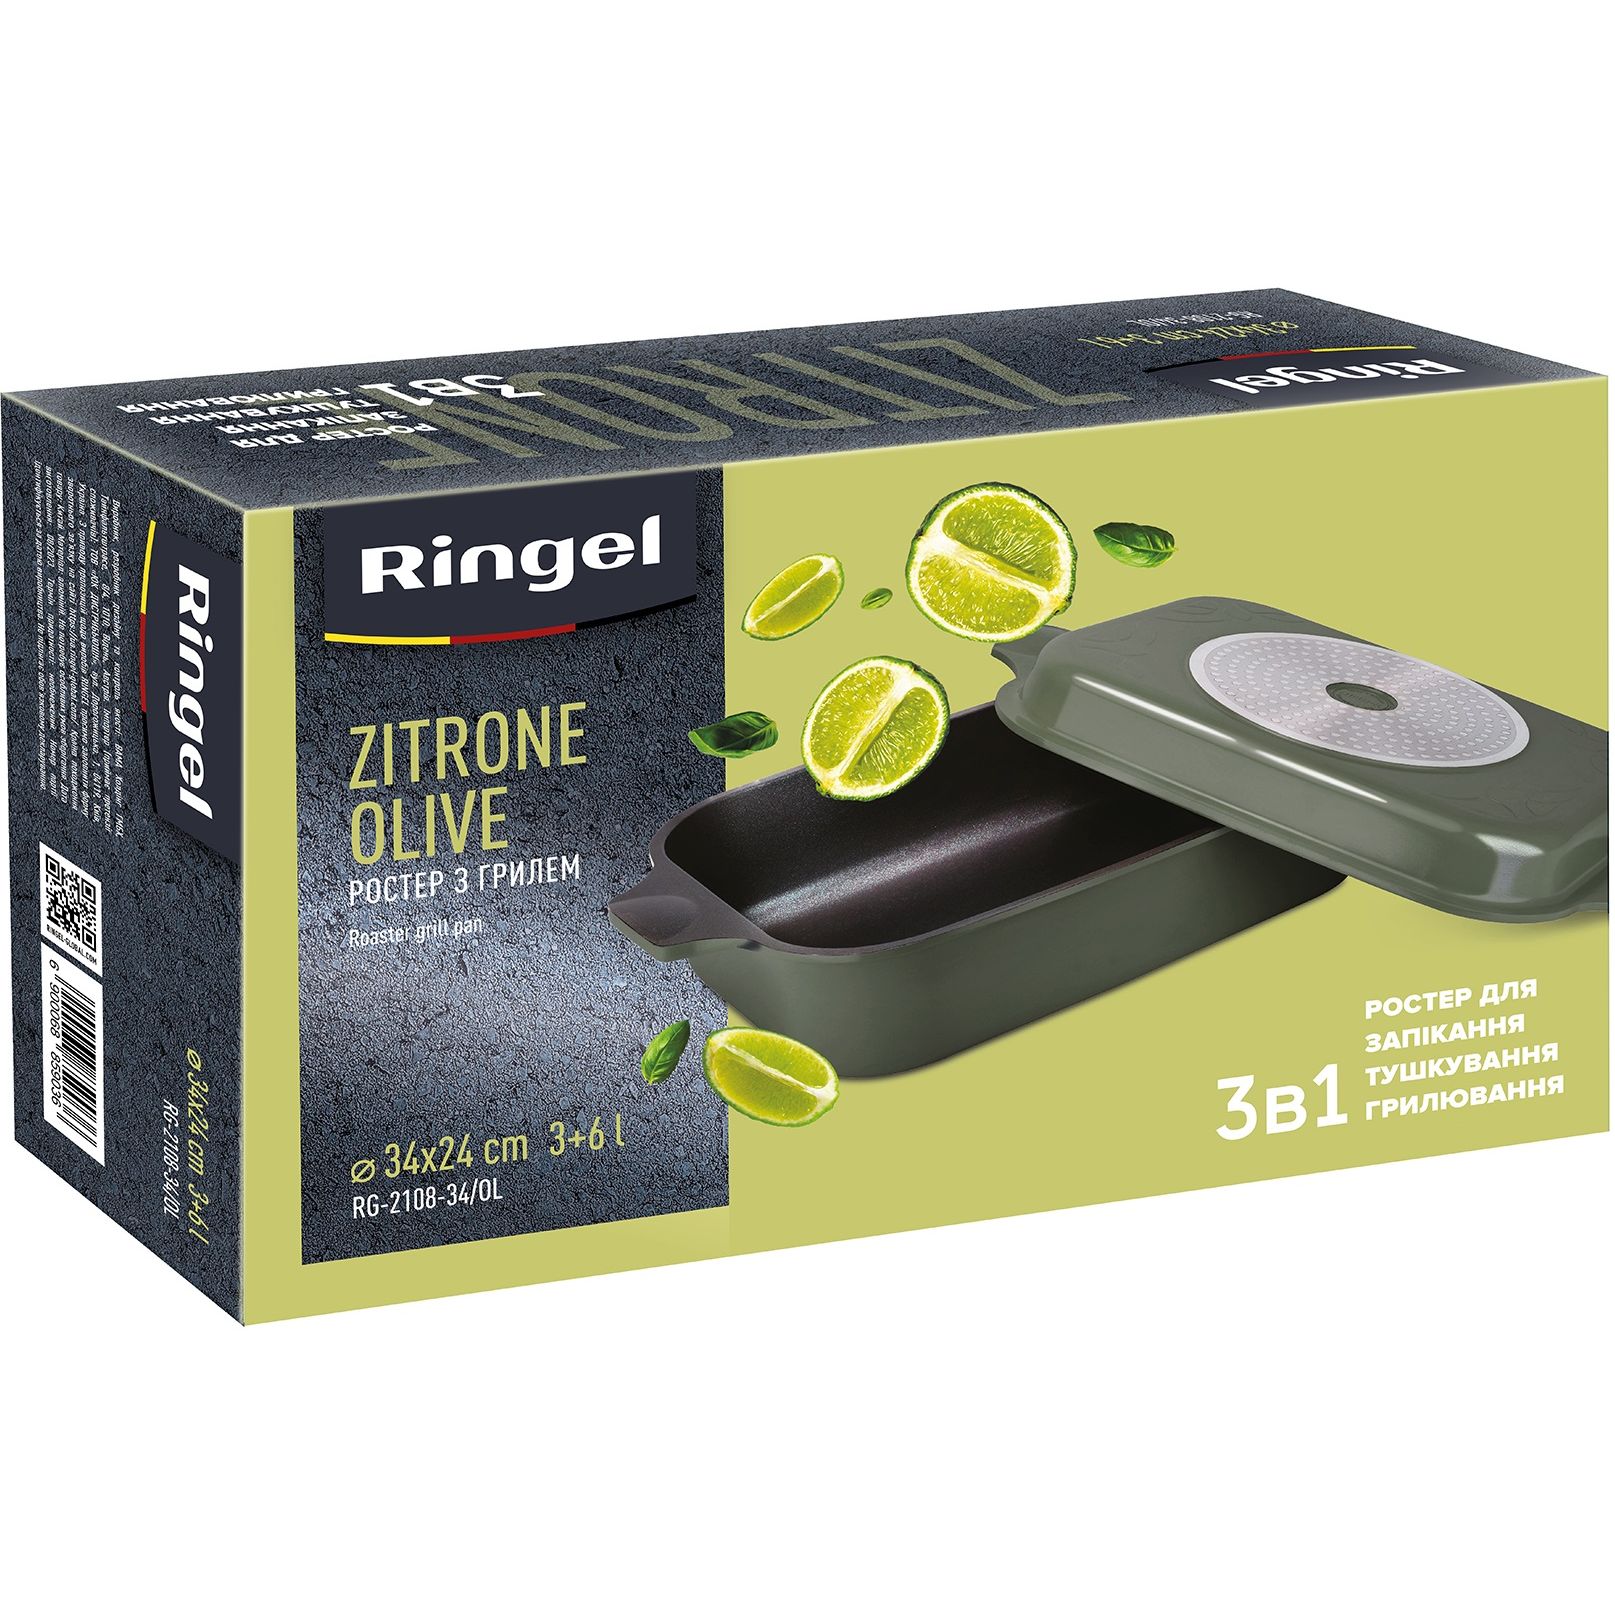 Гусятница Ringel Zitrone Olive Ростер с крышкой 34x24x13.5 см 9 л (6 л +3 л) (RG-2108-34/OL) - фото 7